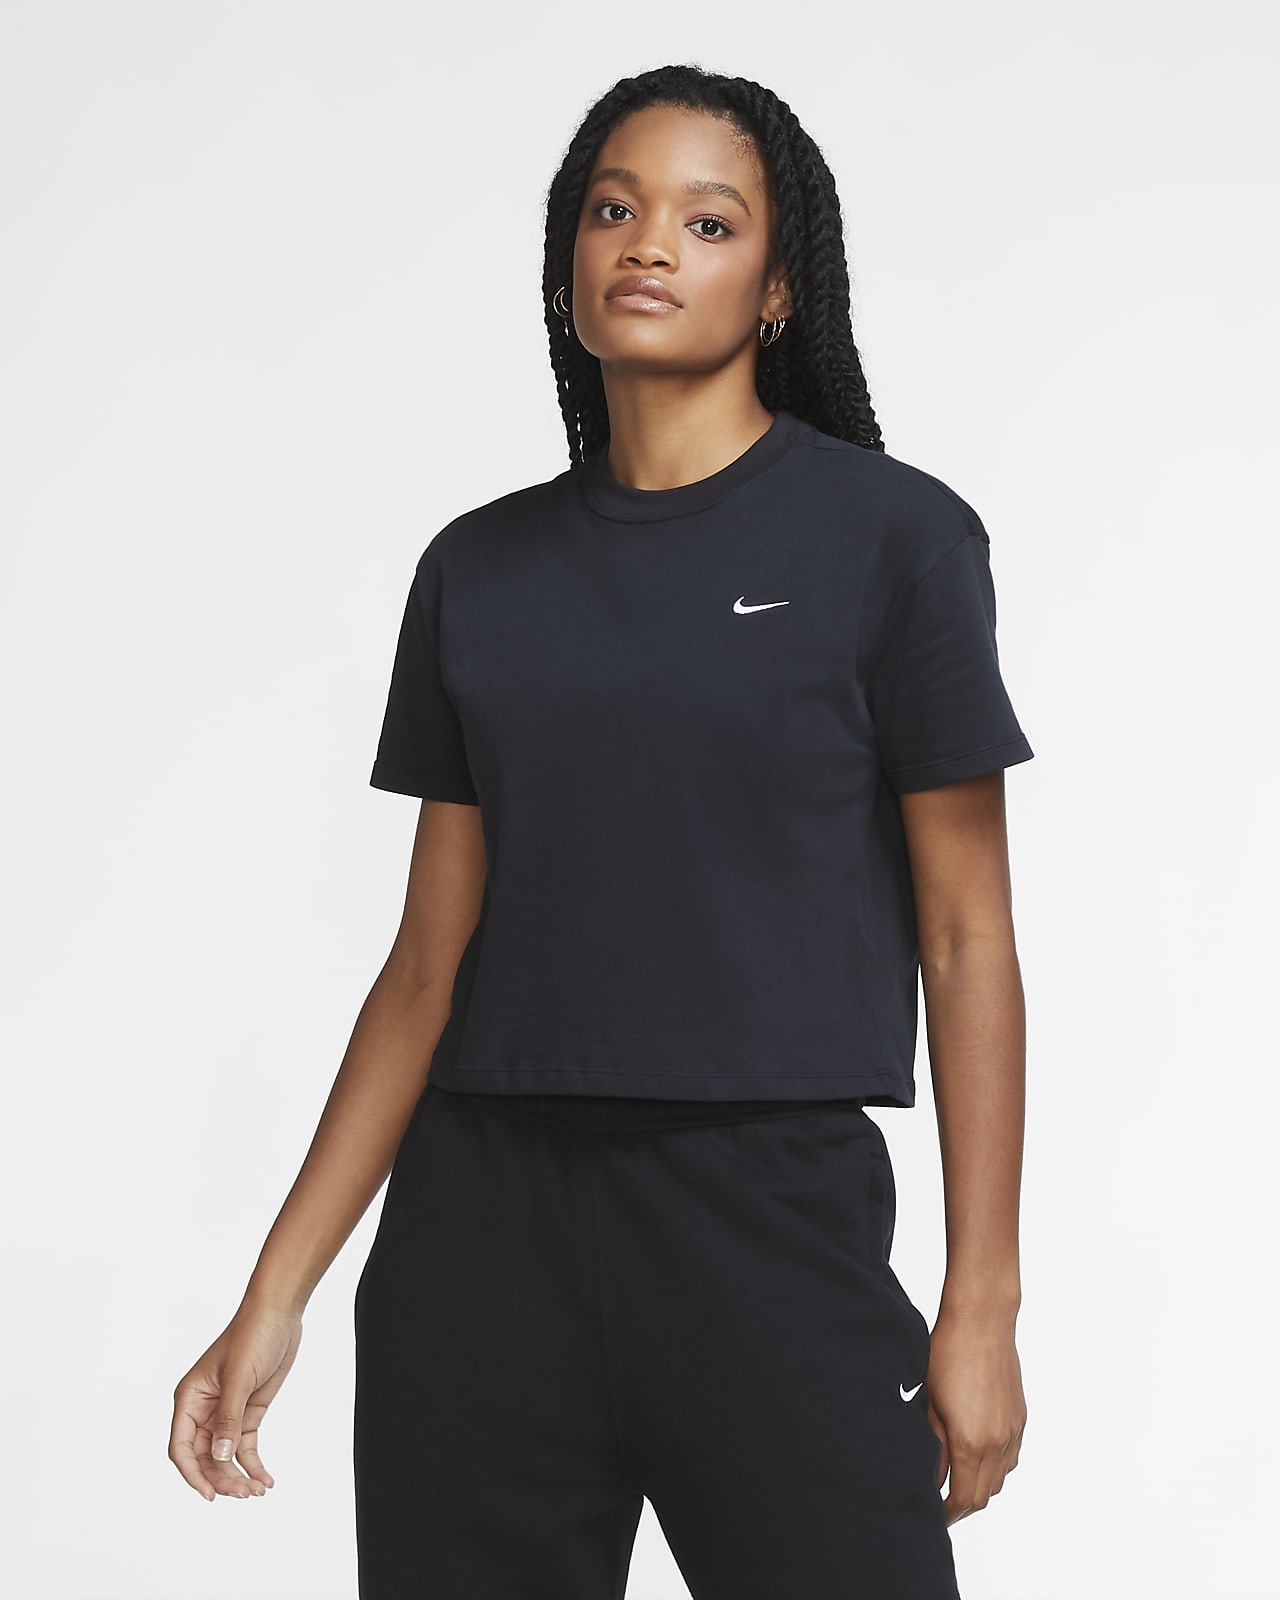 NikeLab Women's T-Shirt